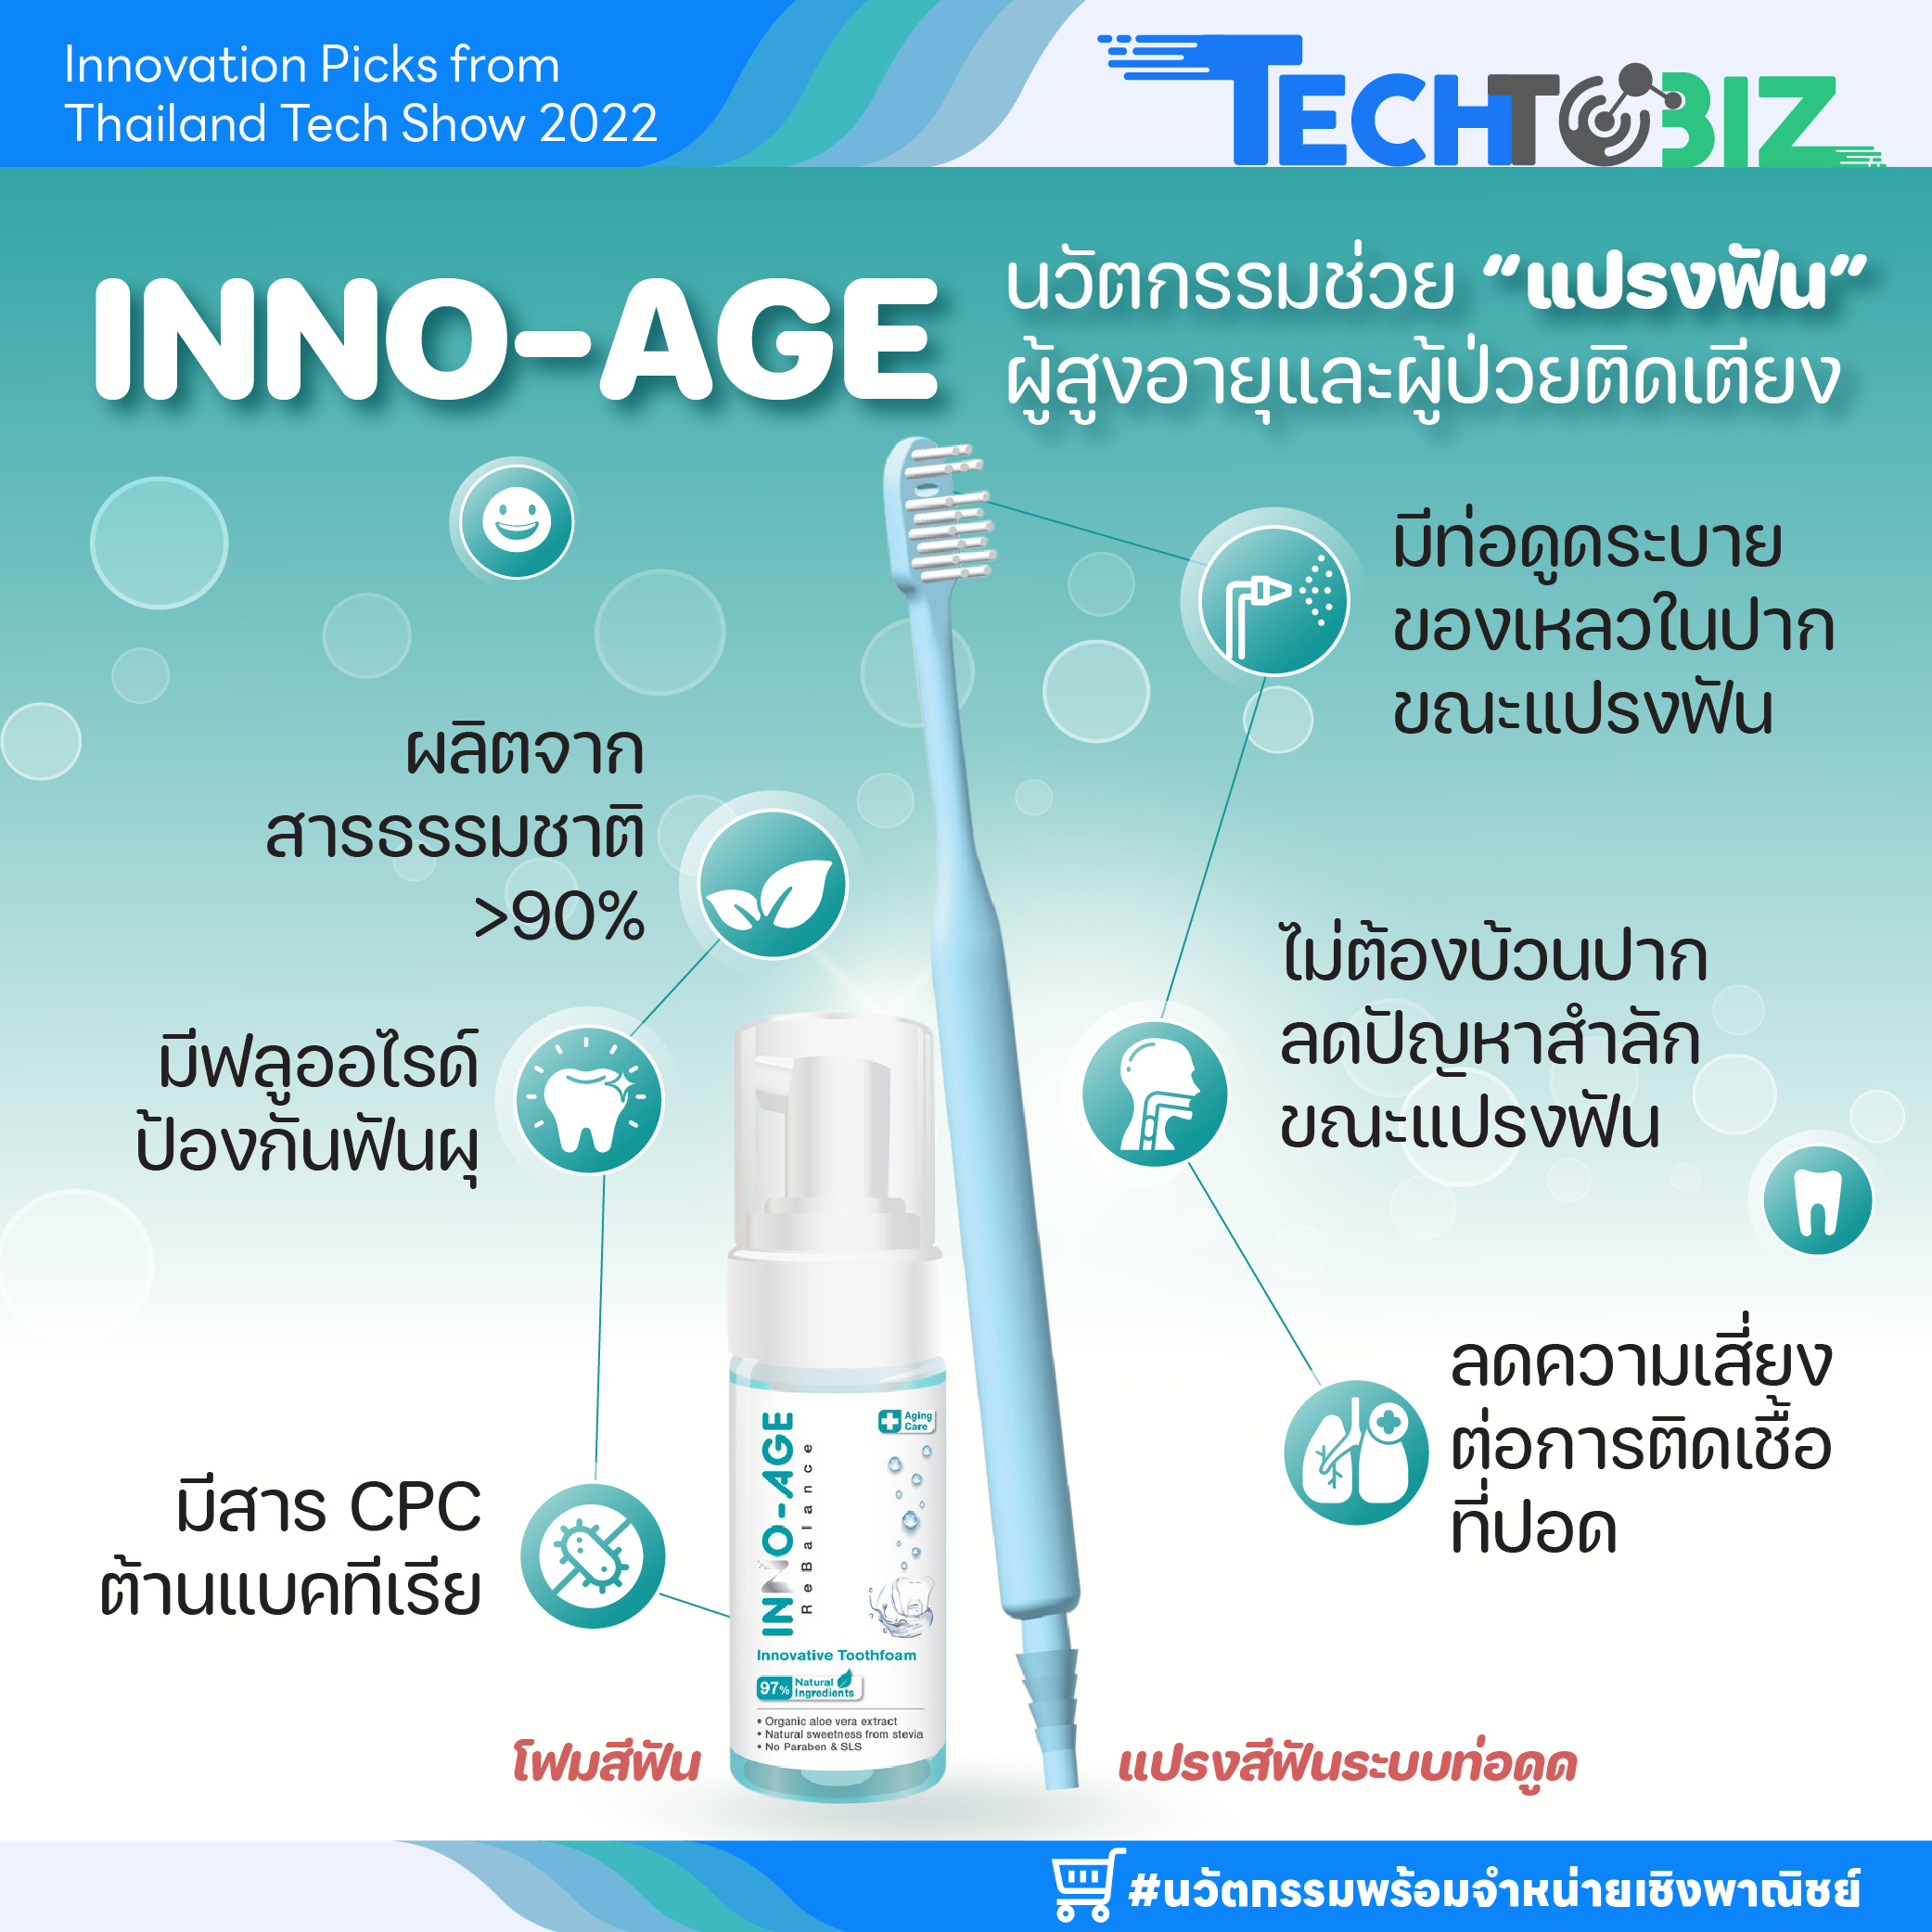 INNO-AGE นวัตกรรมช่วย “แปรงฟัน” ผู้สูงอายุและผู้ป่วยติดเตียง ใช้ง่าย ไม่สำลัก